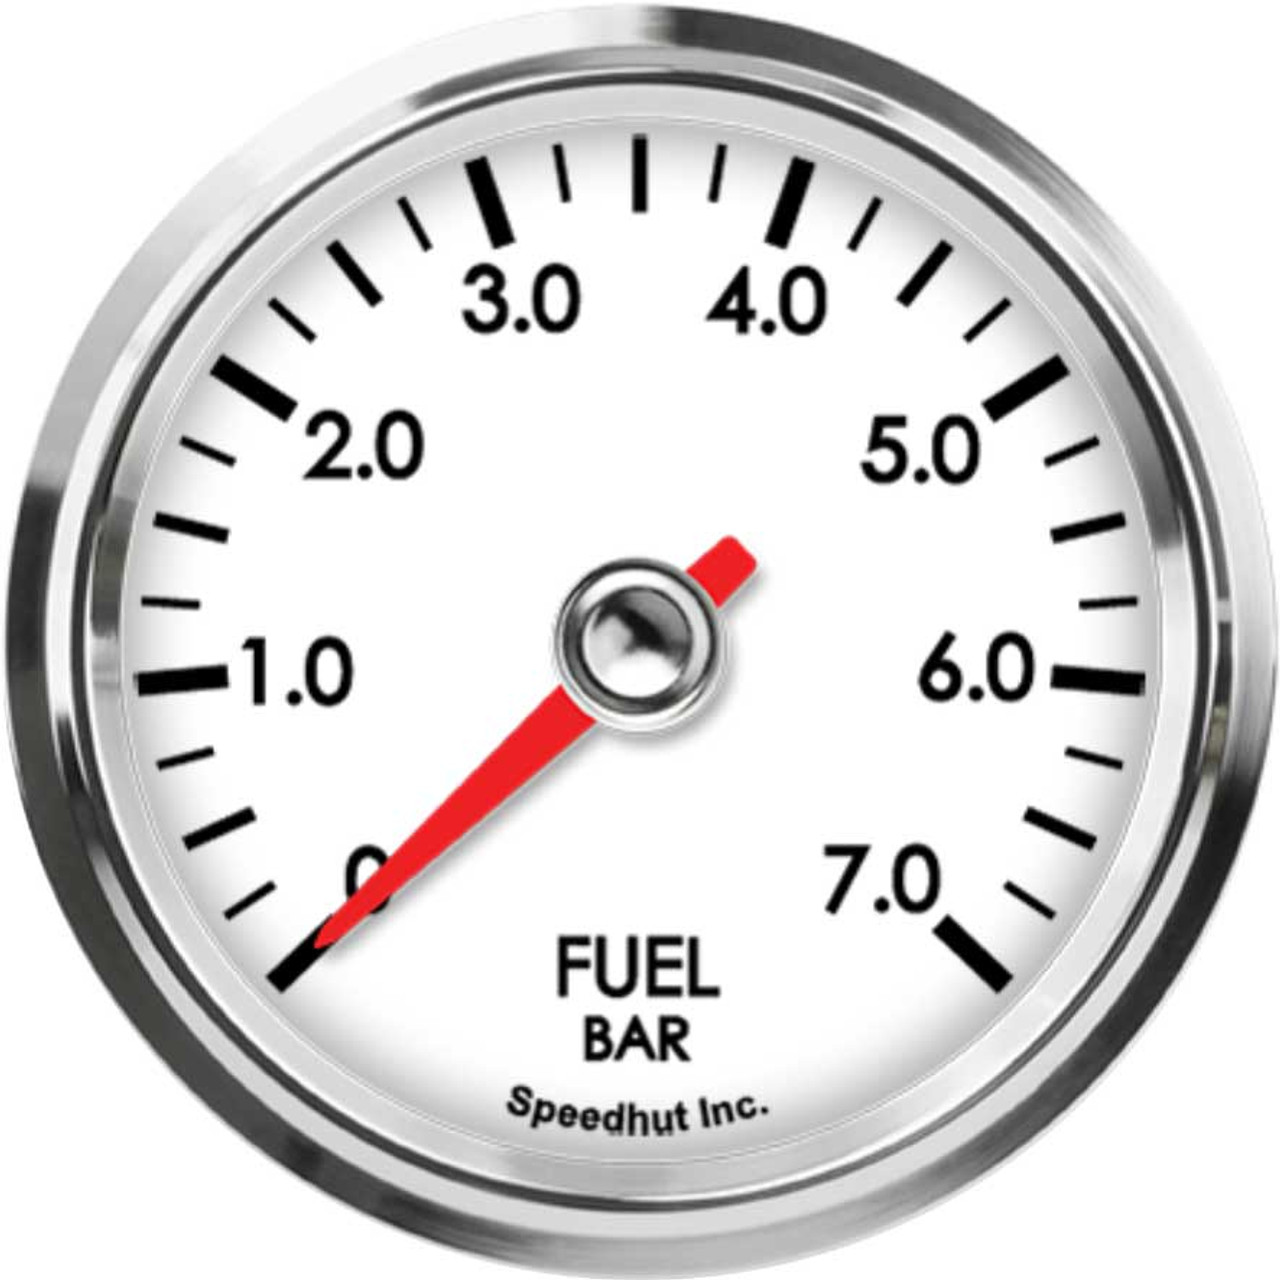 2-5/8" Classic Fuel Pressure Gauge 0-7.0 bar